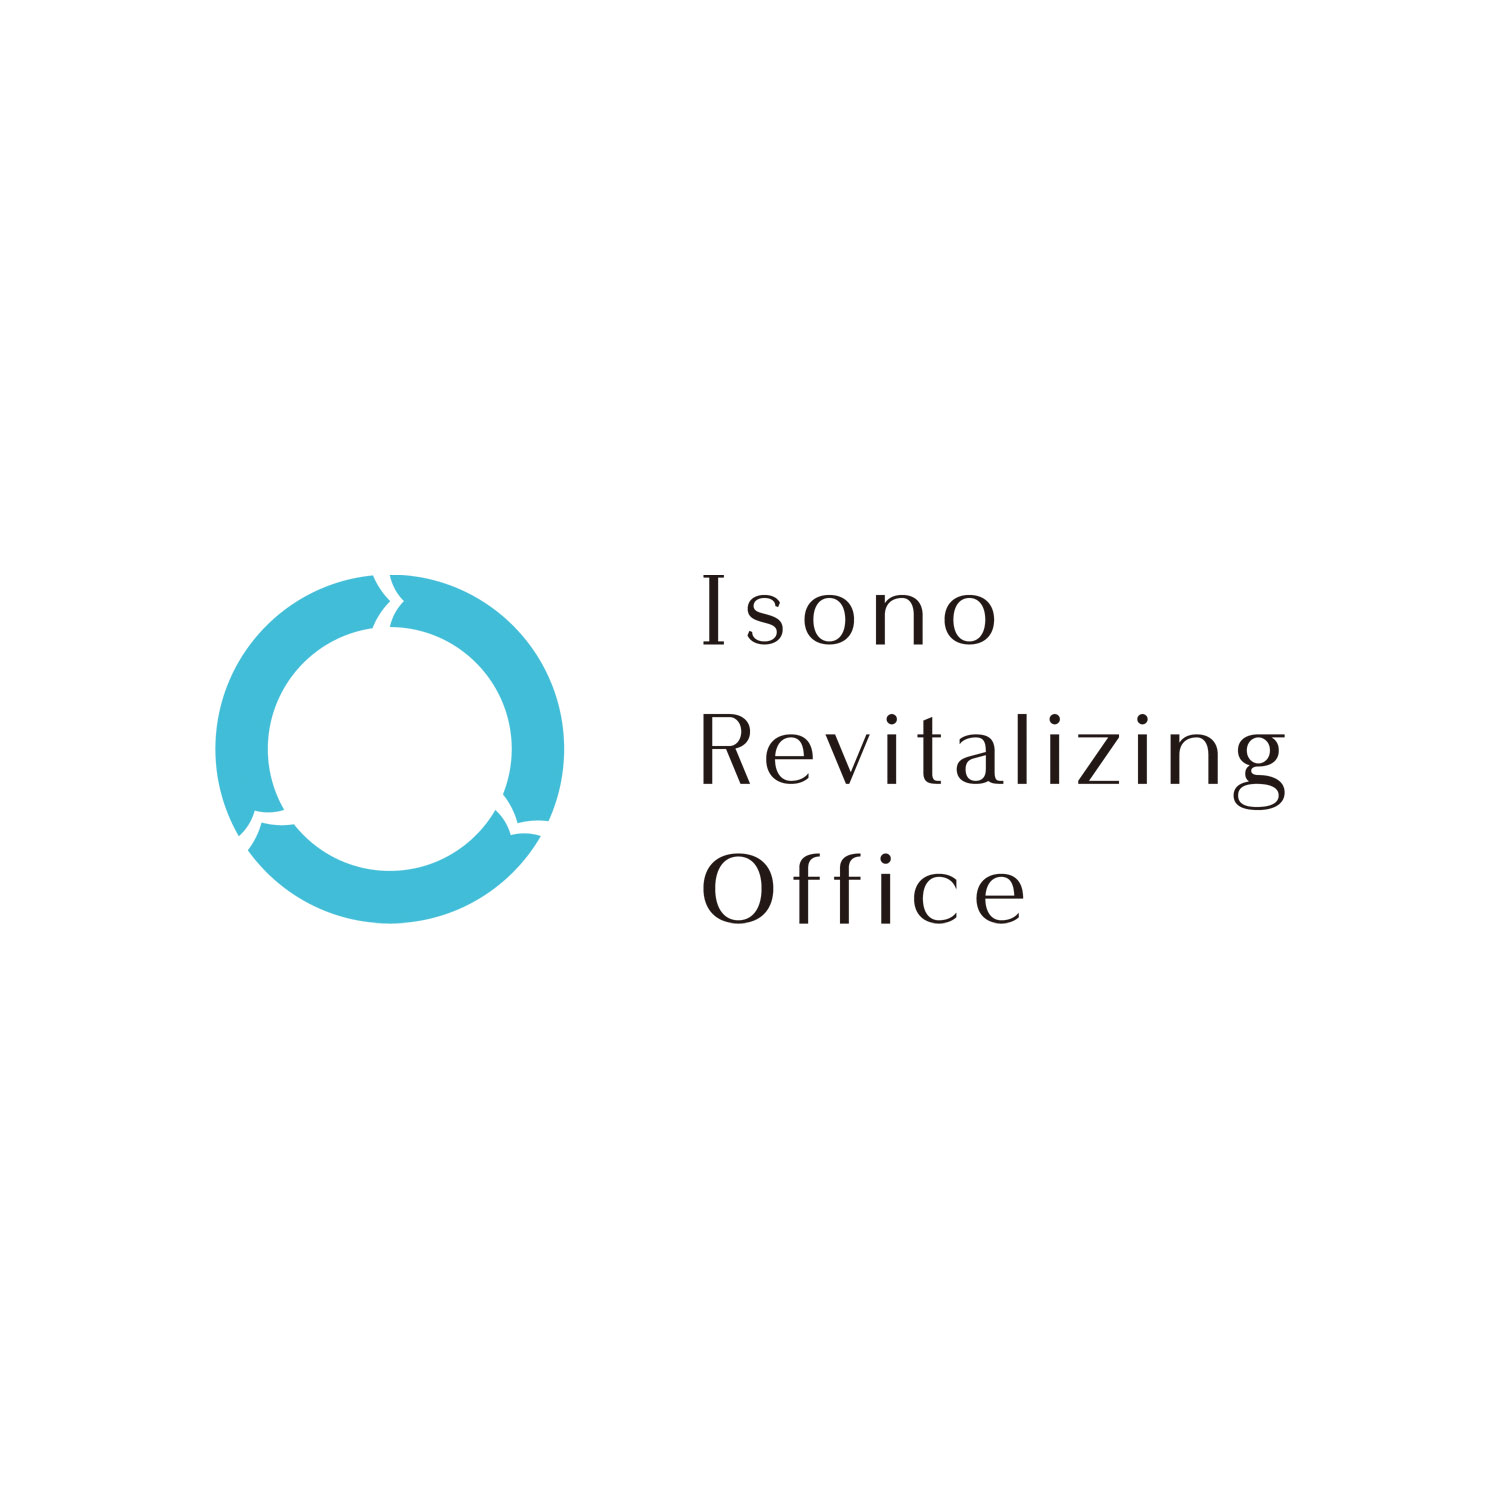 Isono Revitalizing Office Logo